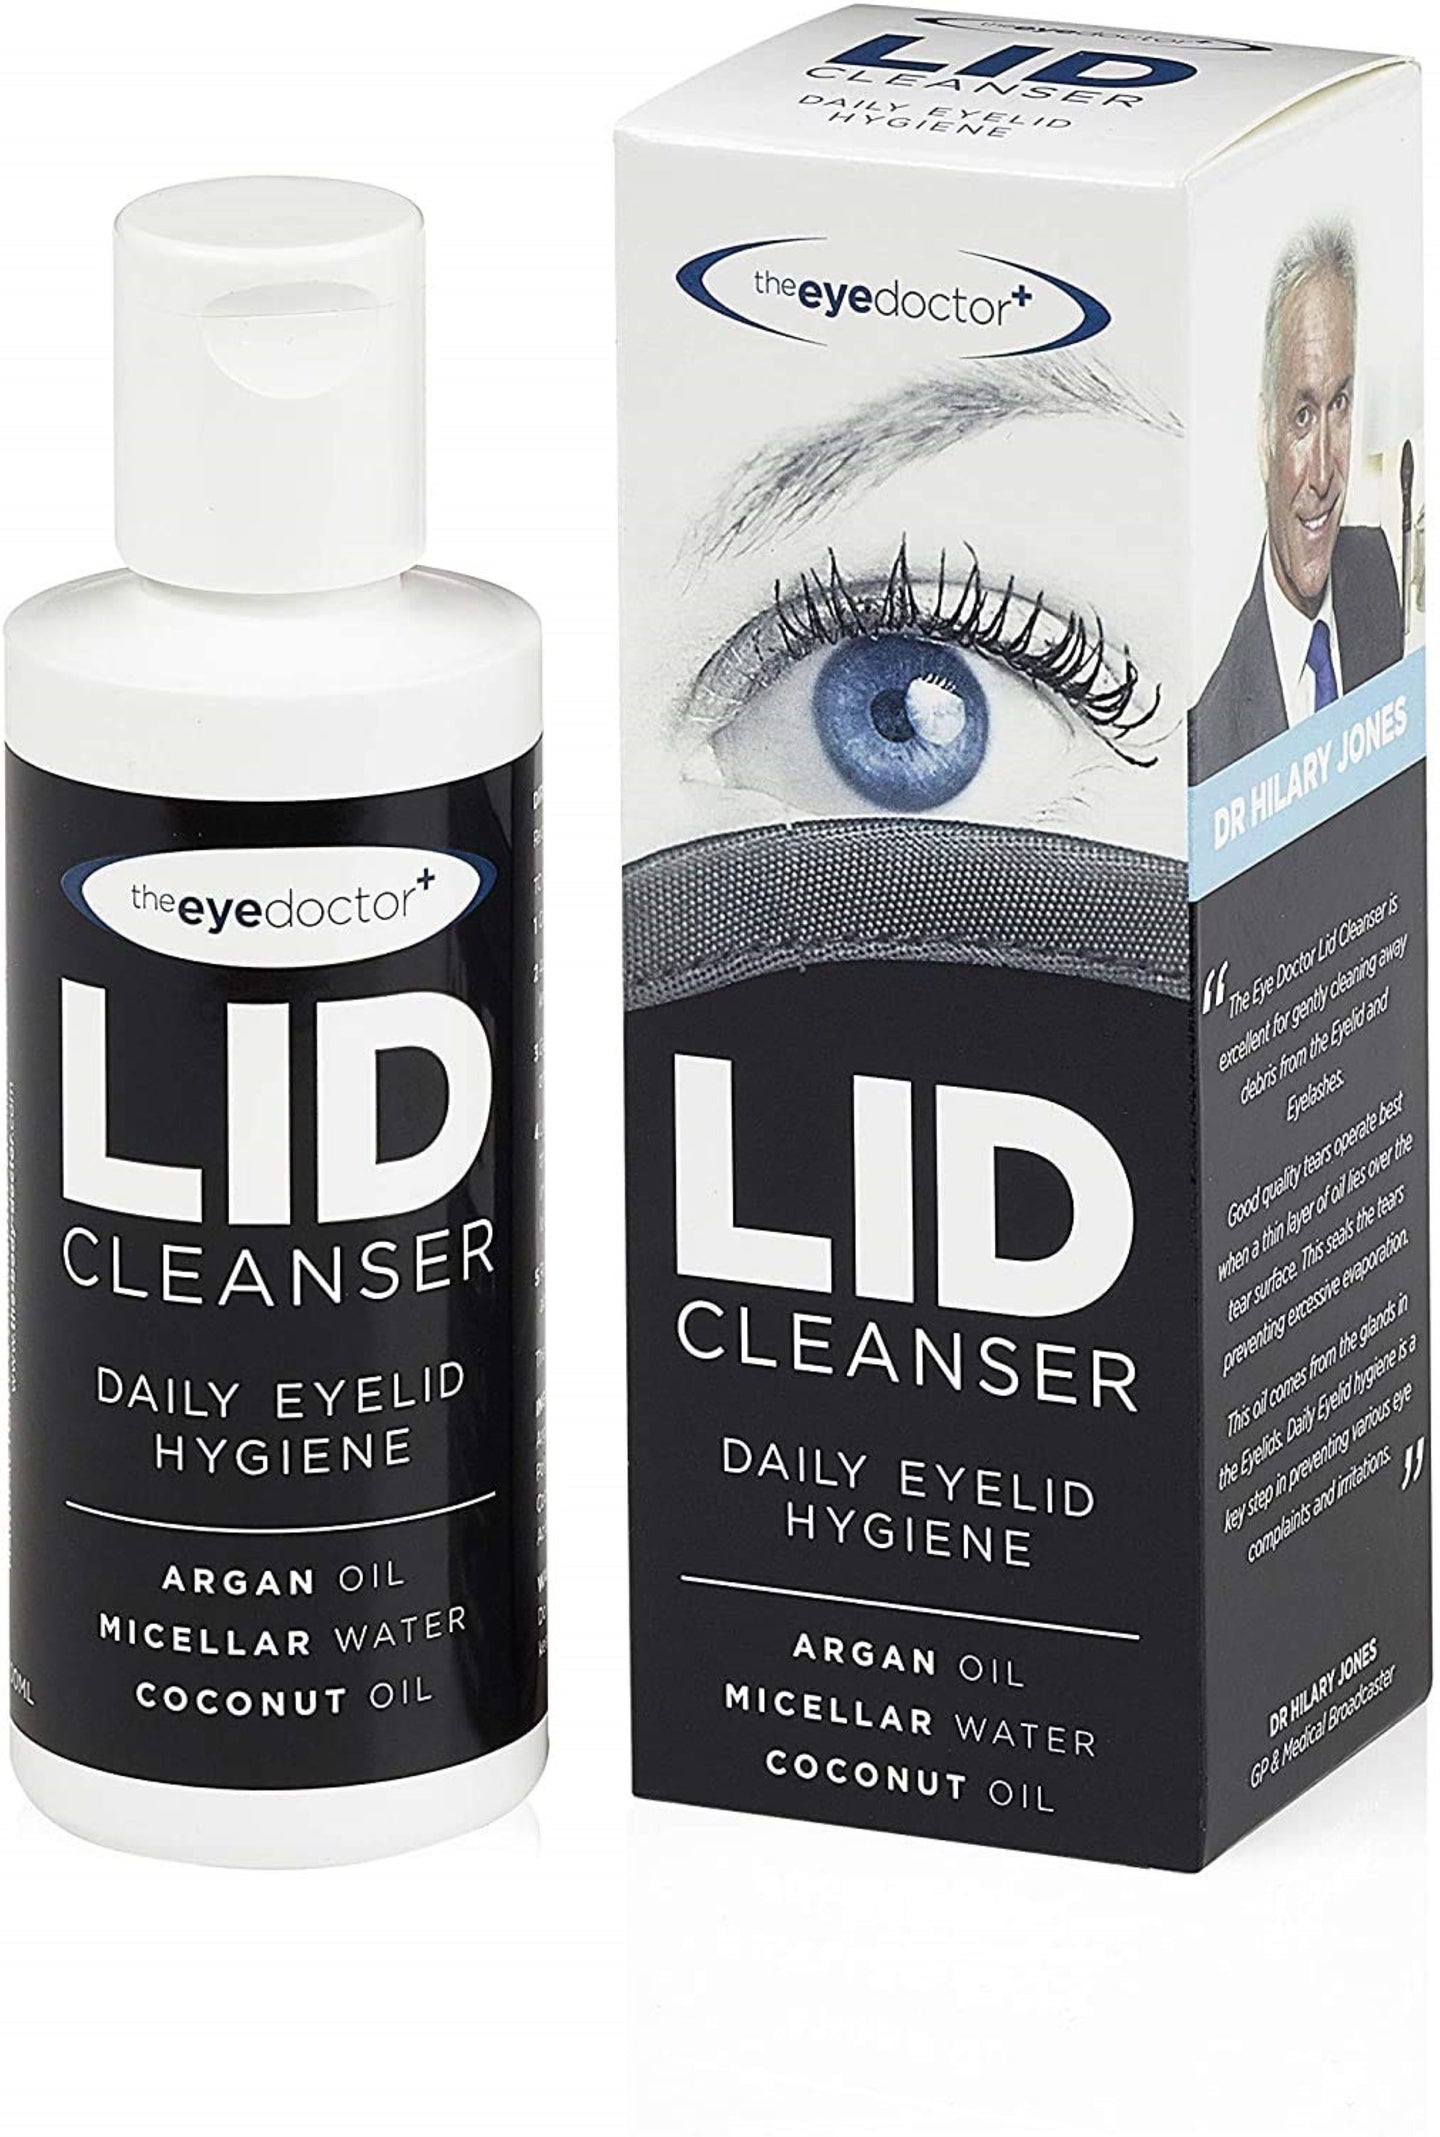 The Eye Doctor Daily Eyelid Hygiene Cleanser